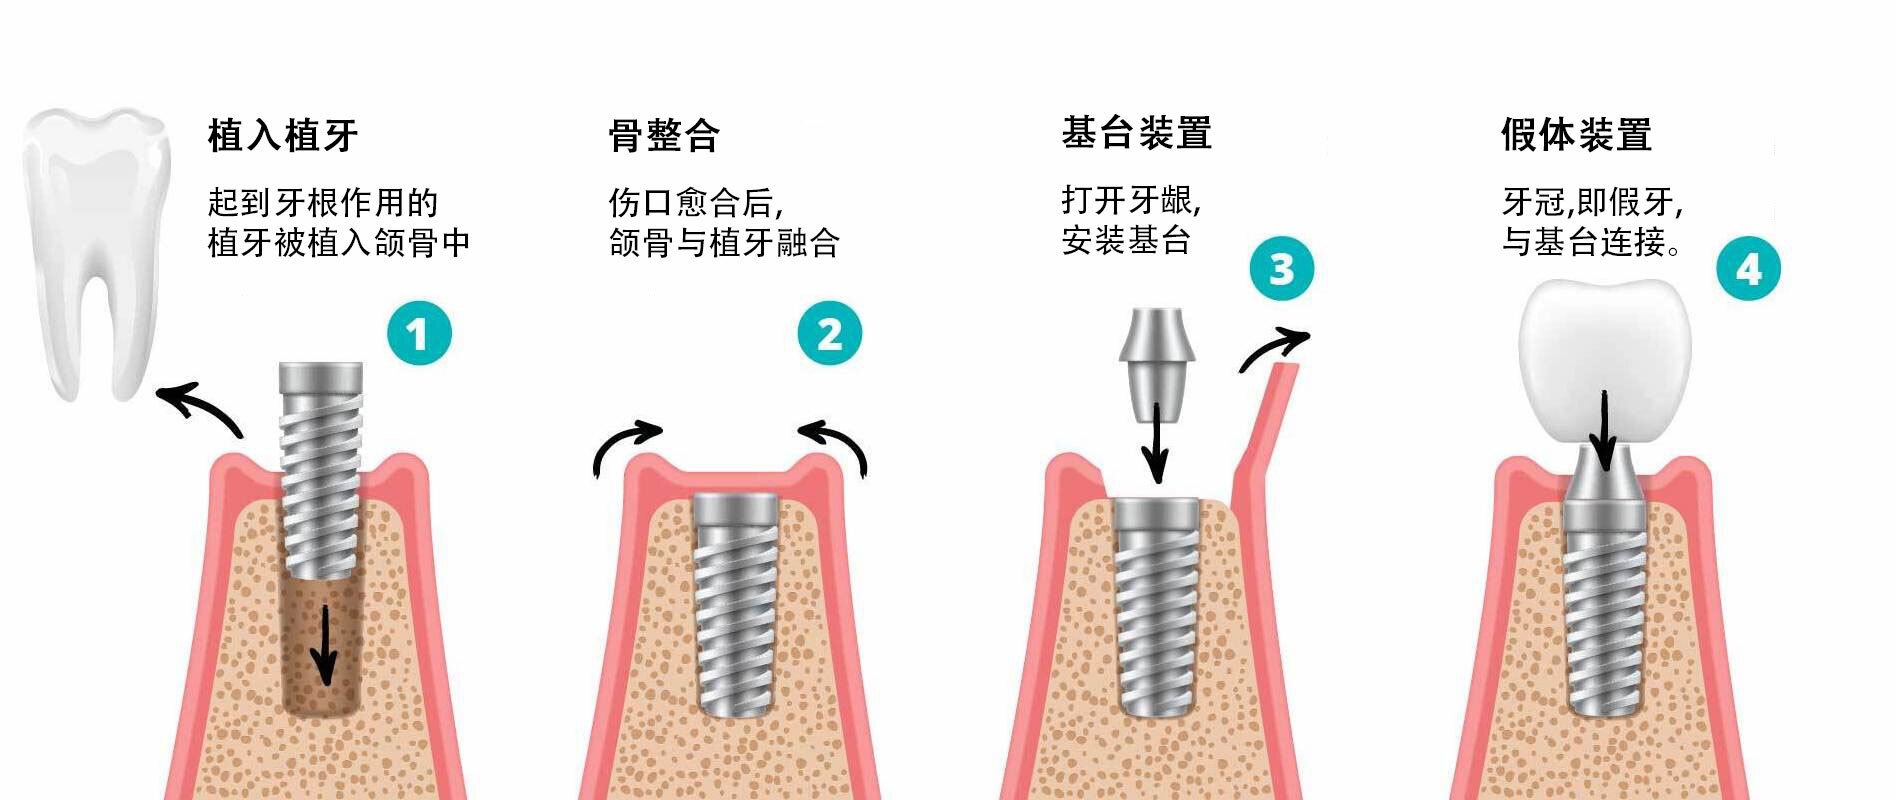 dental-implants-graphic-02-1-ch